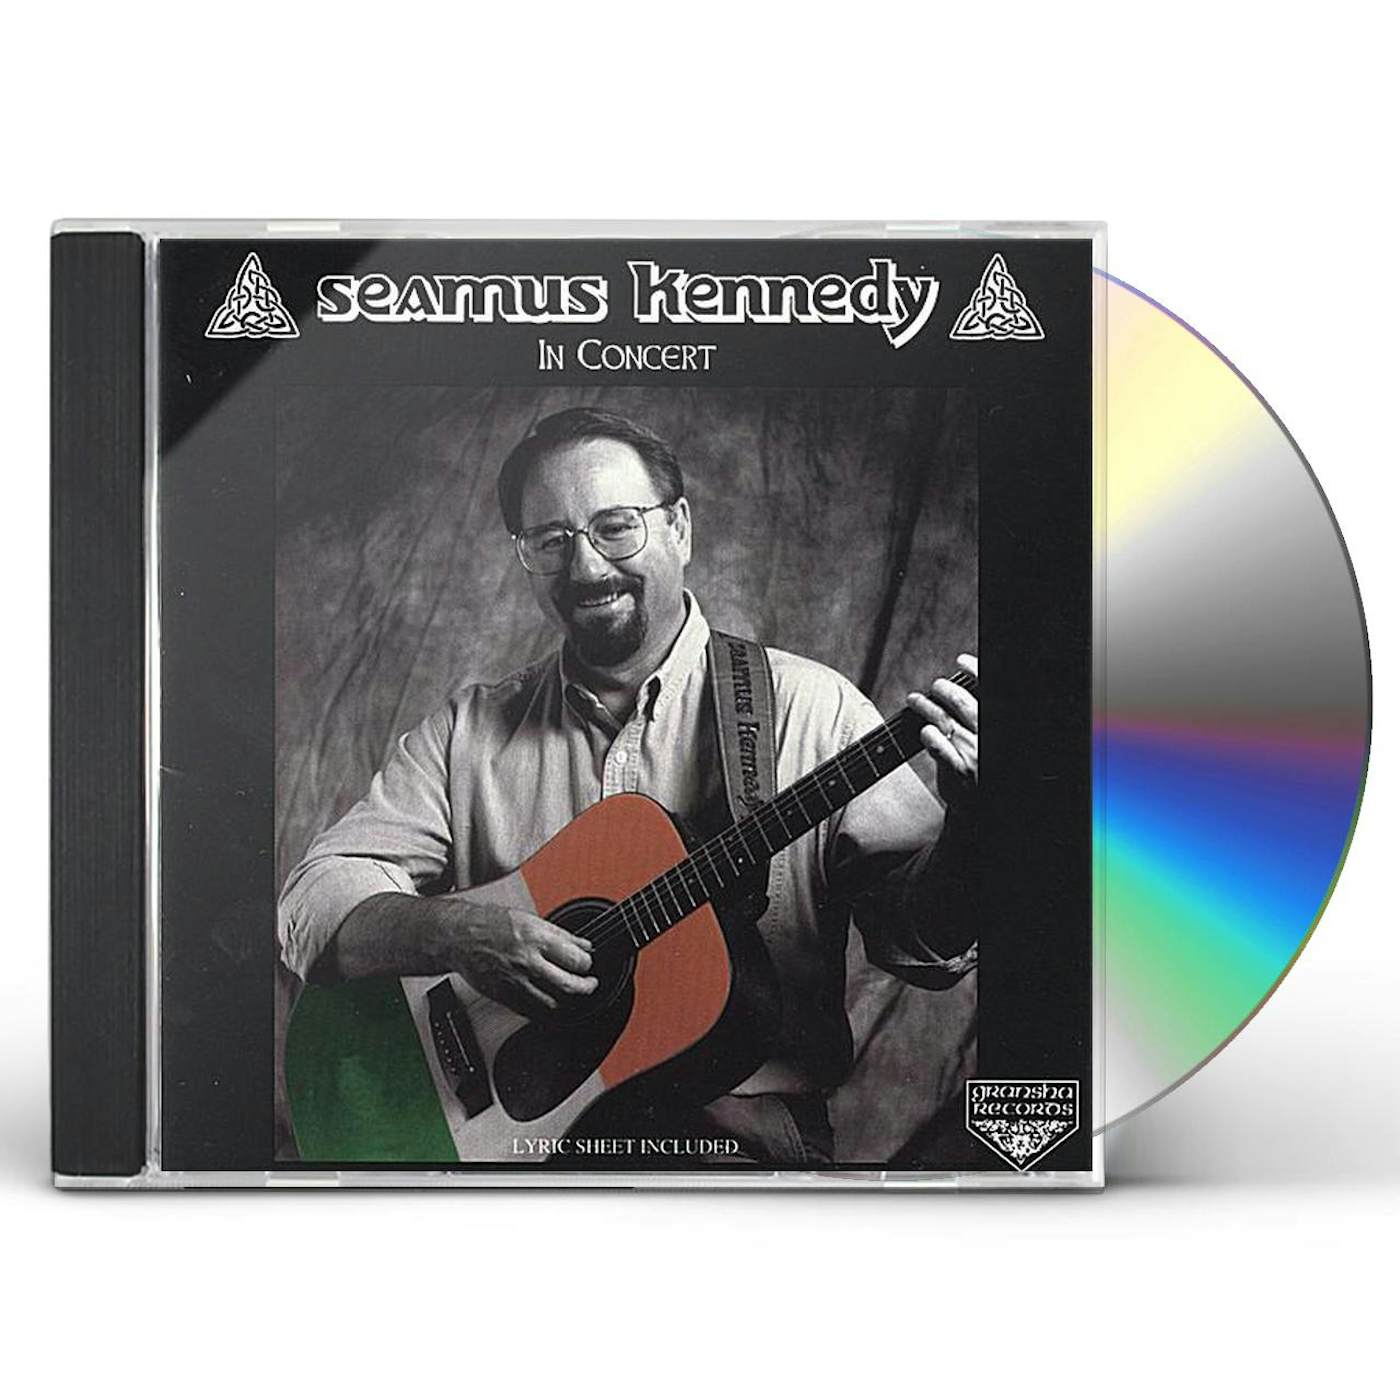 Seamus Kennedy IN CONCERT CD